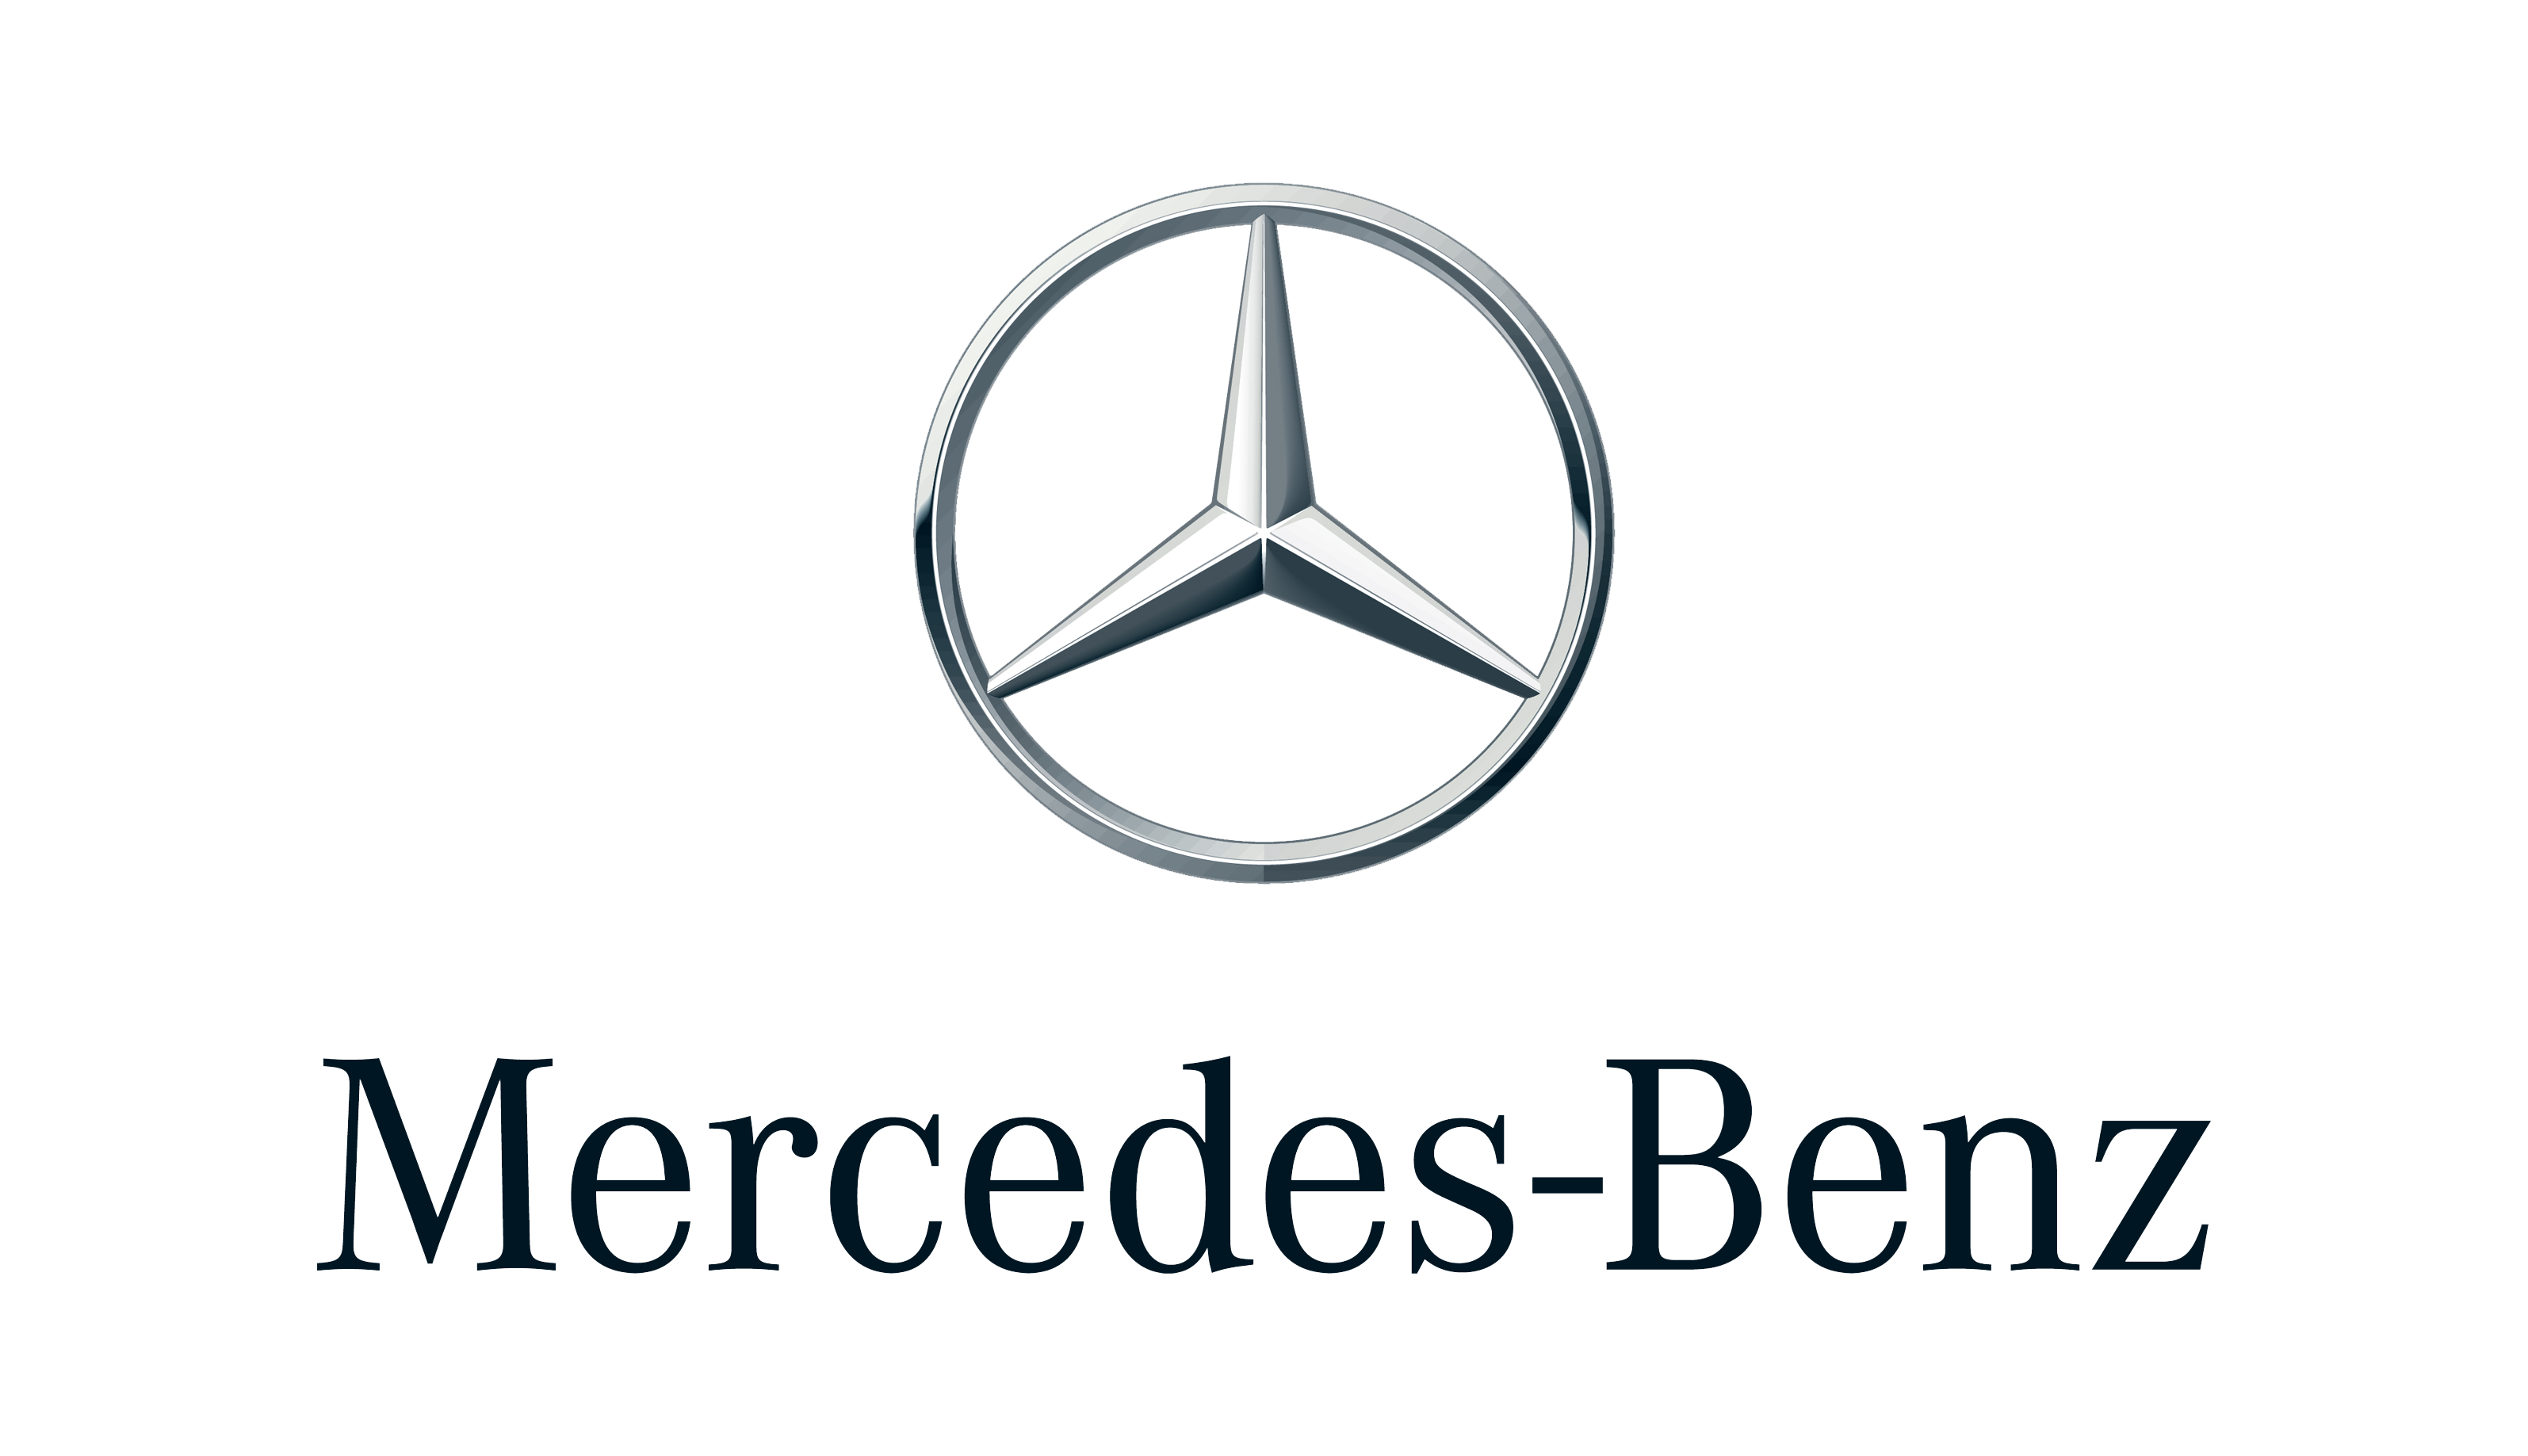 Mercedes Benz Logo PNG Transparent & SVG Vector - Freebie Supply